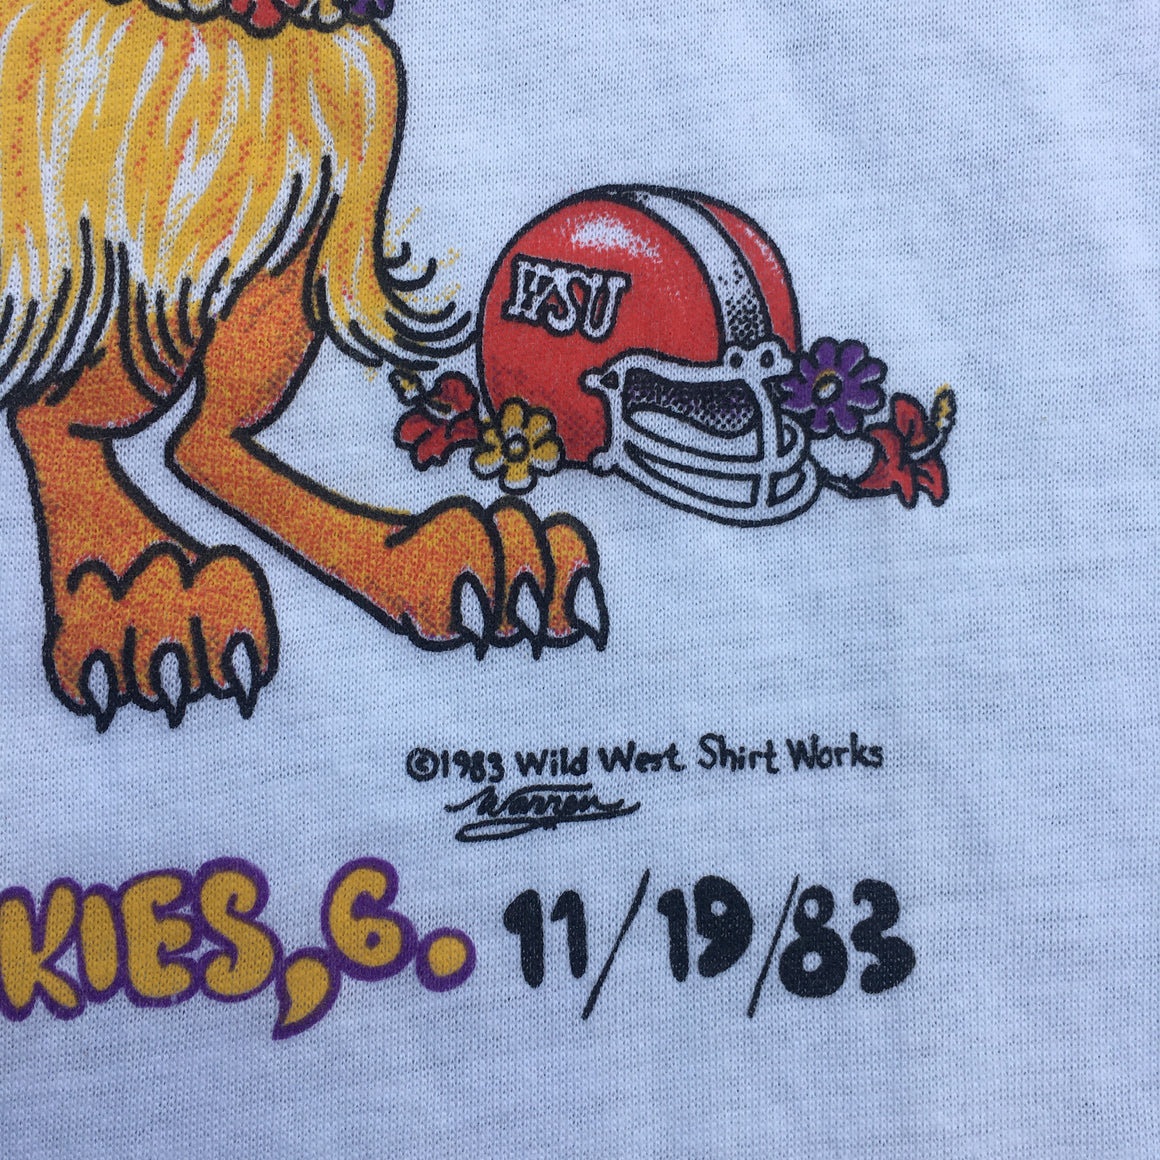 WSU 1983 Apple Cup shirt - M